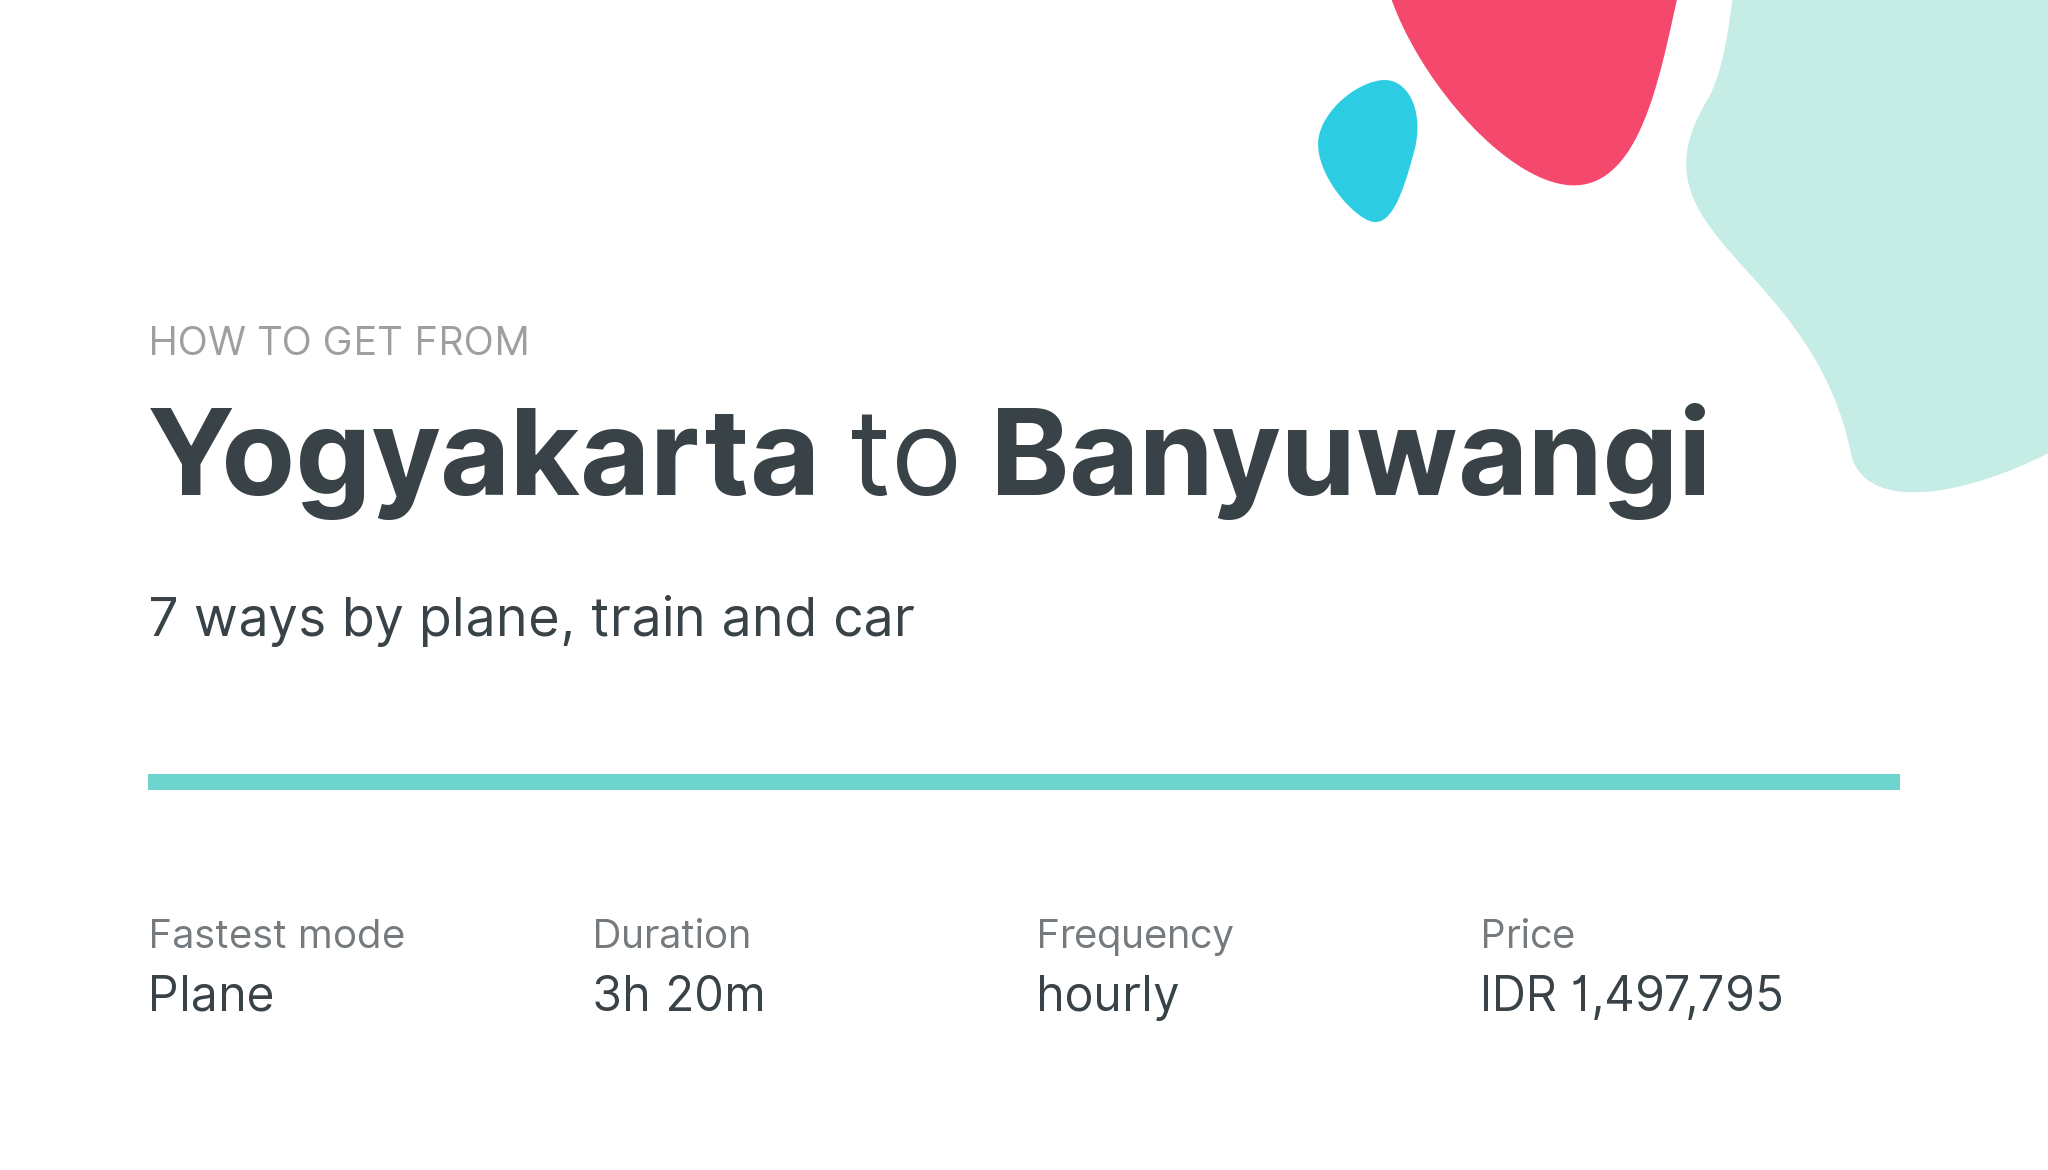 How do I get from Yogyakarta to Banyuwangi